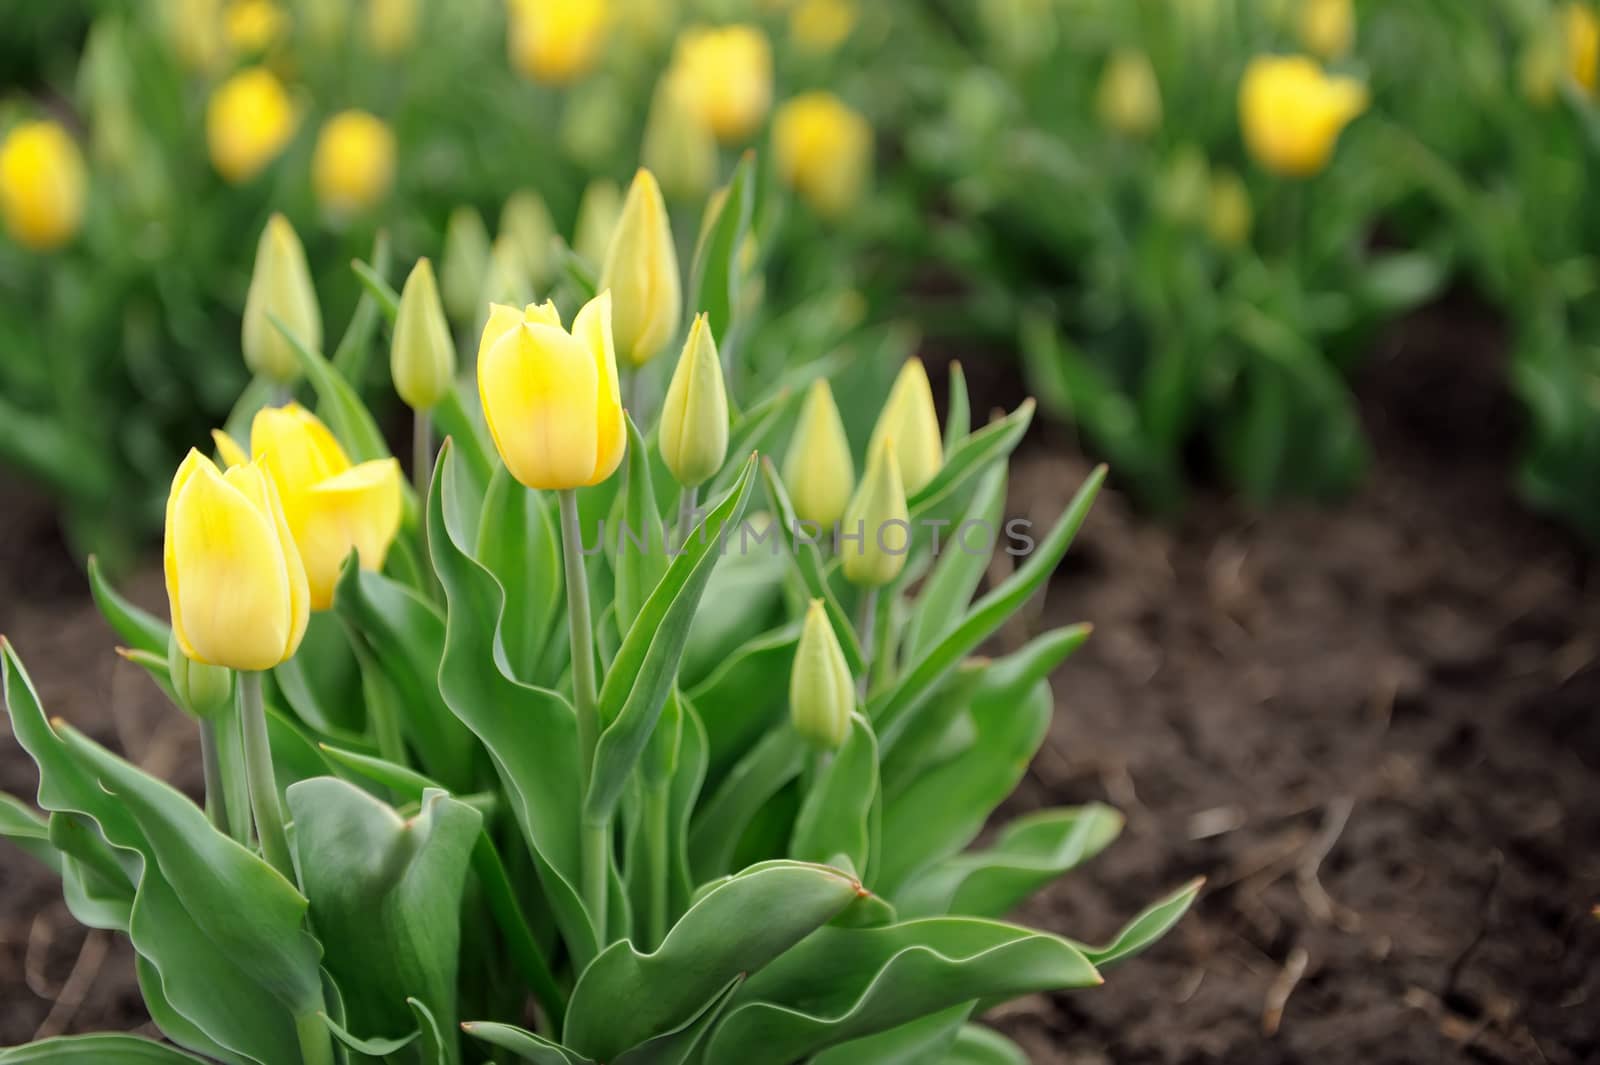 Tulips in spring field by byrdyak